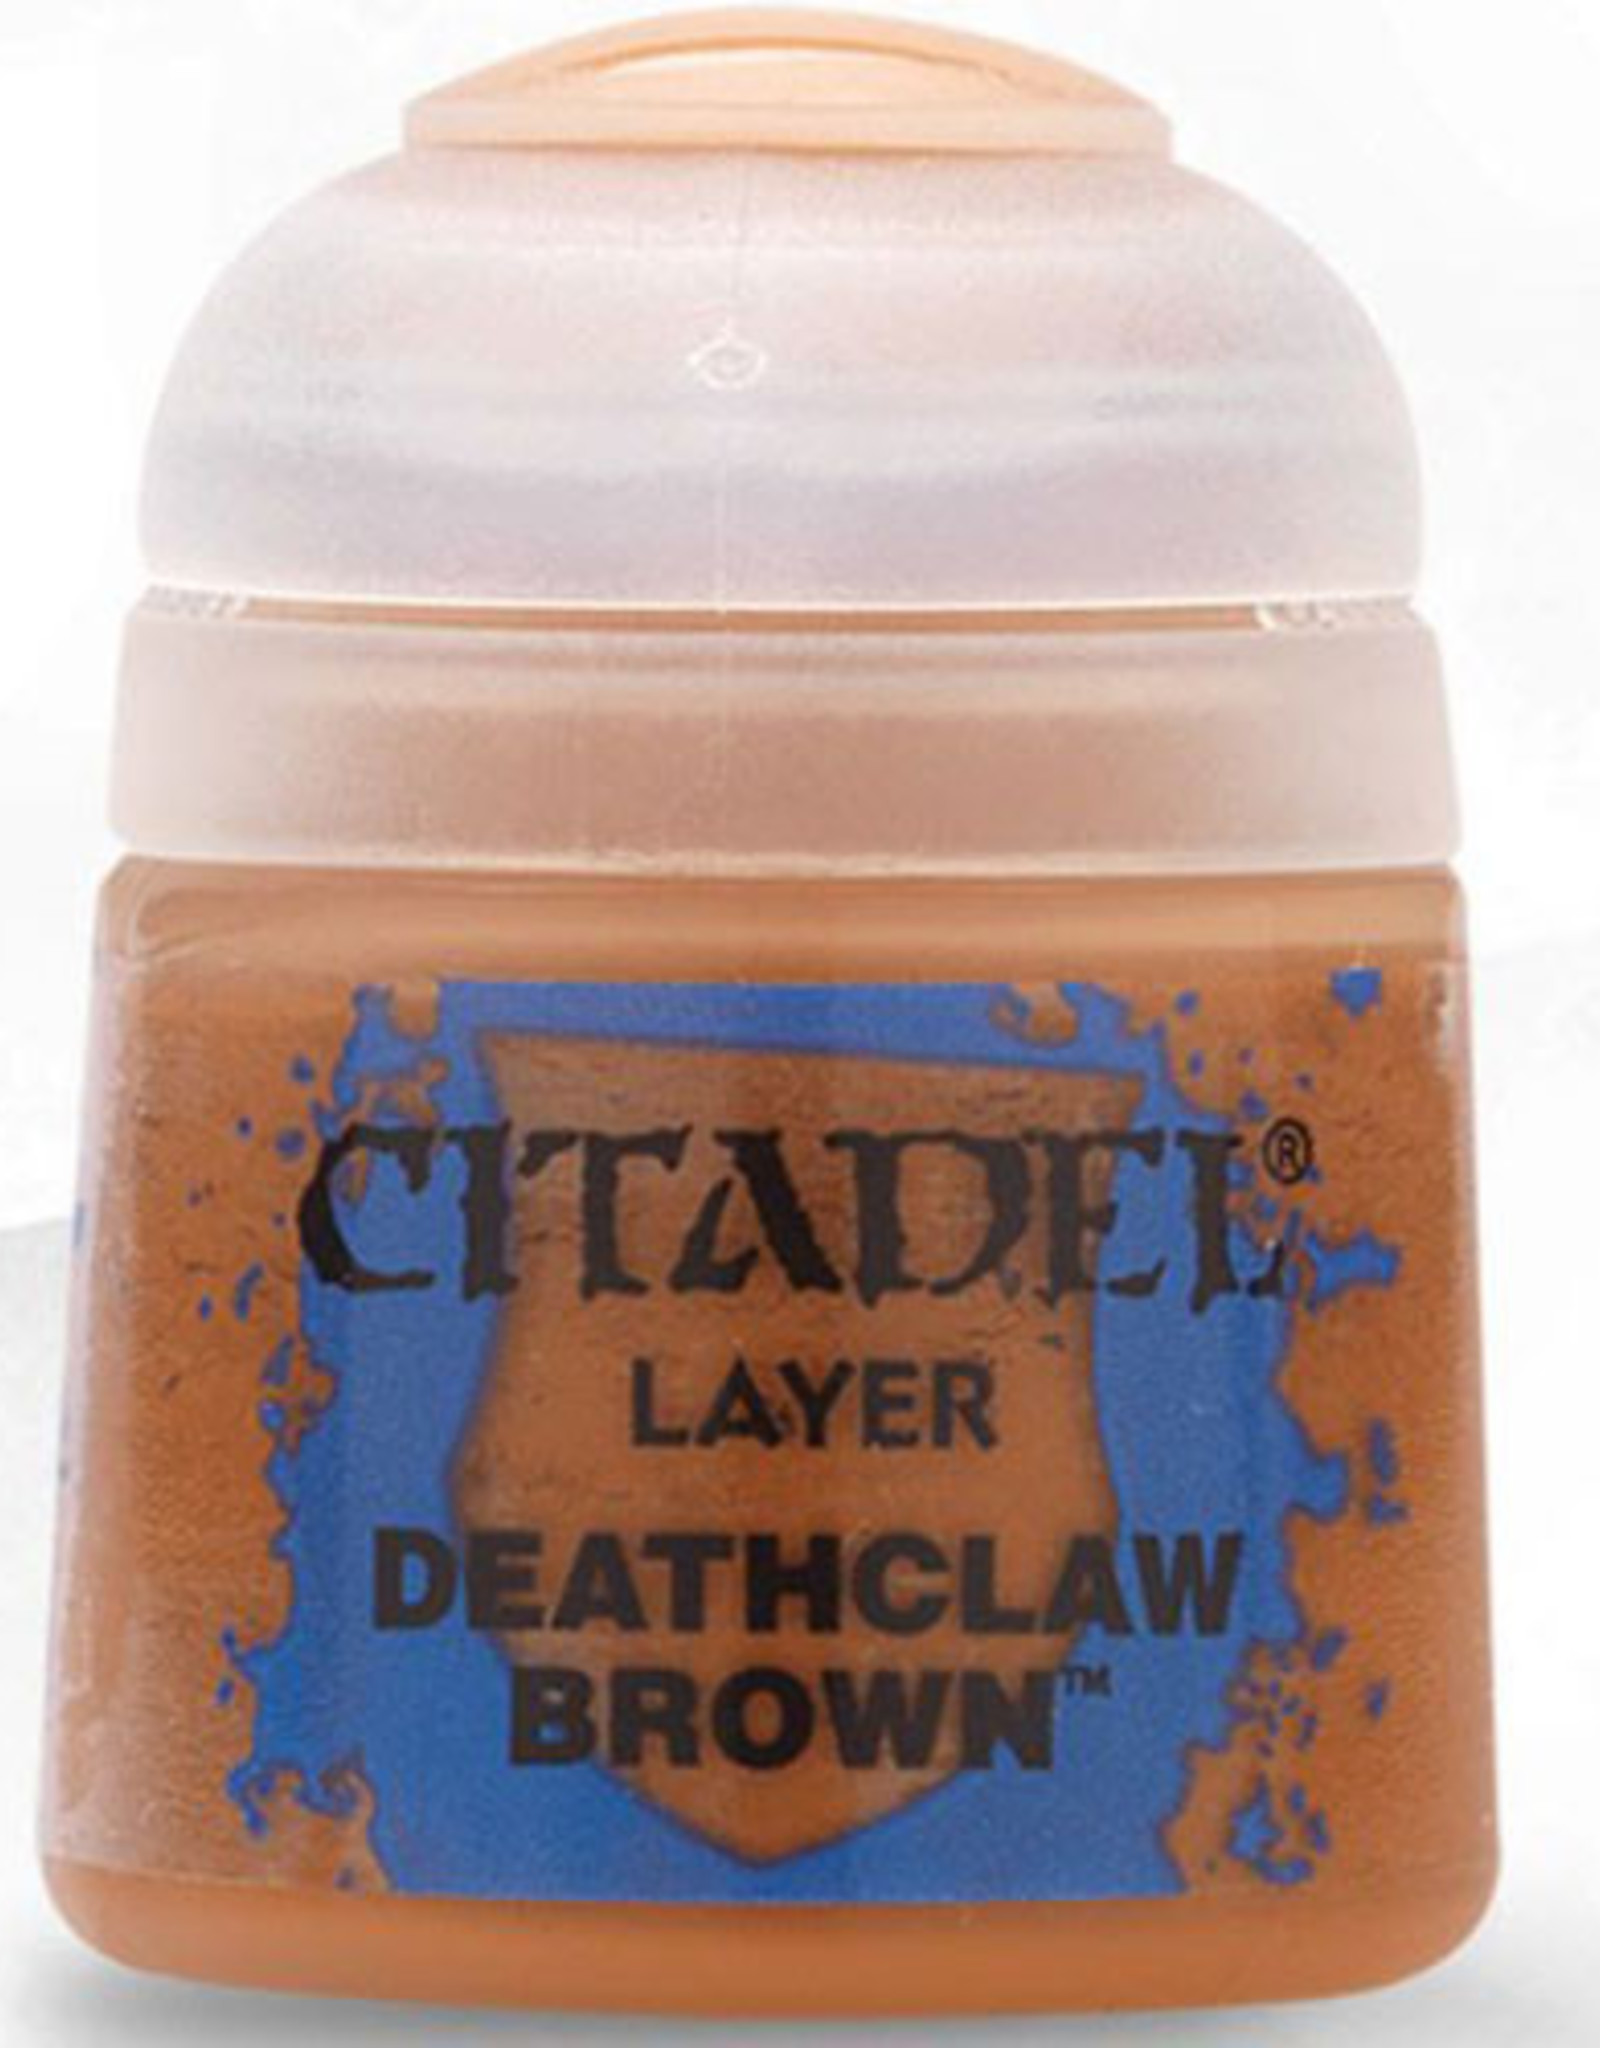 Games Workshop Citadel Layer: Deathclaw Brown